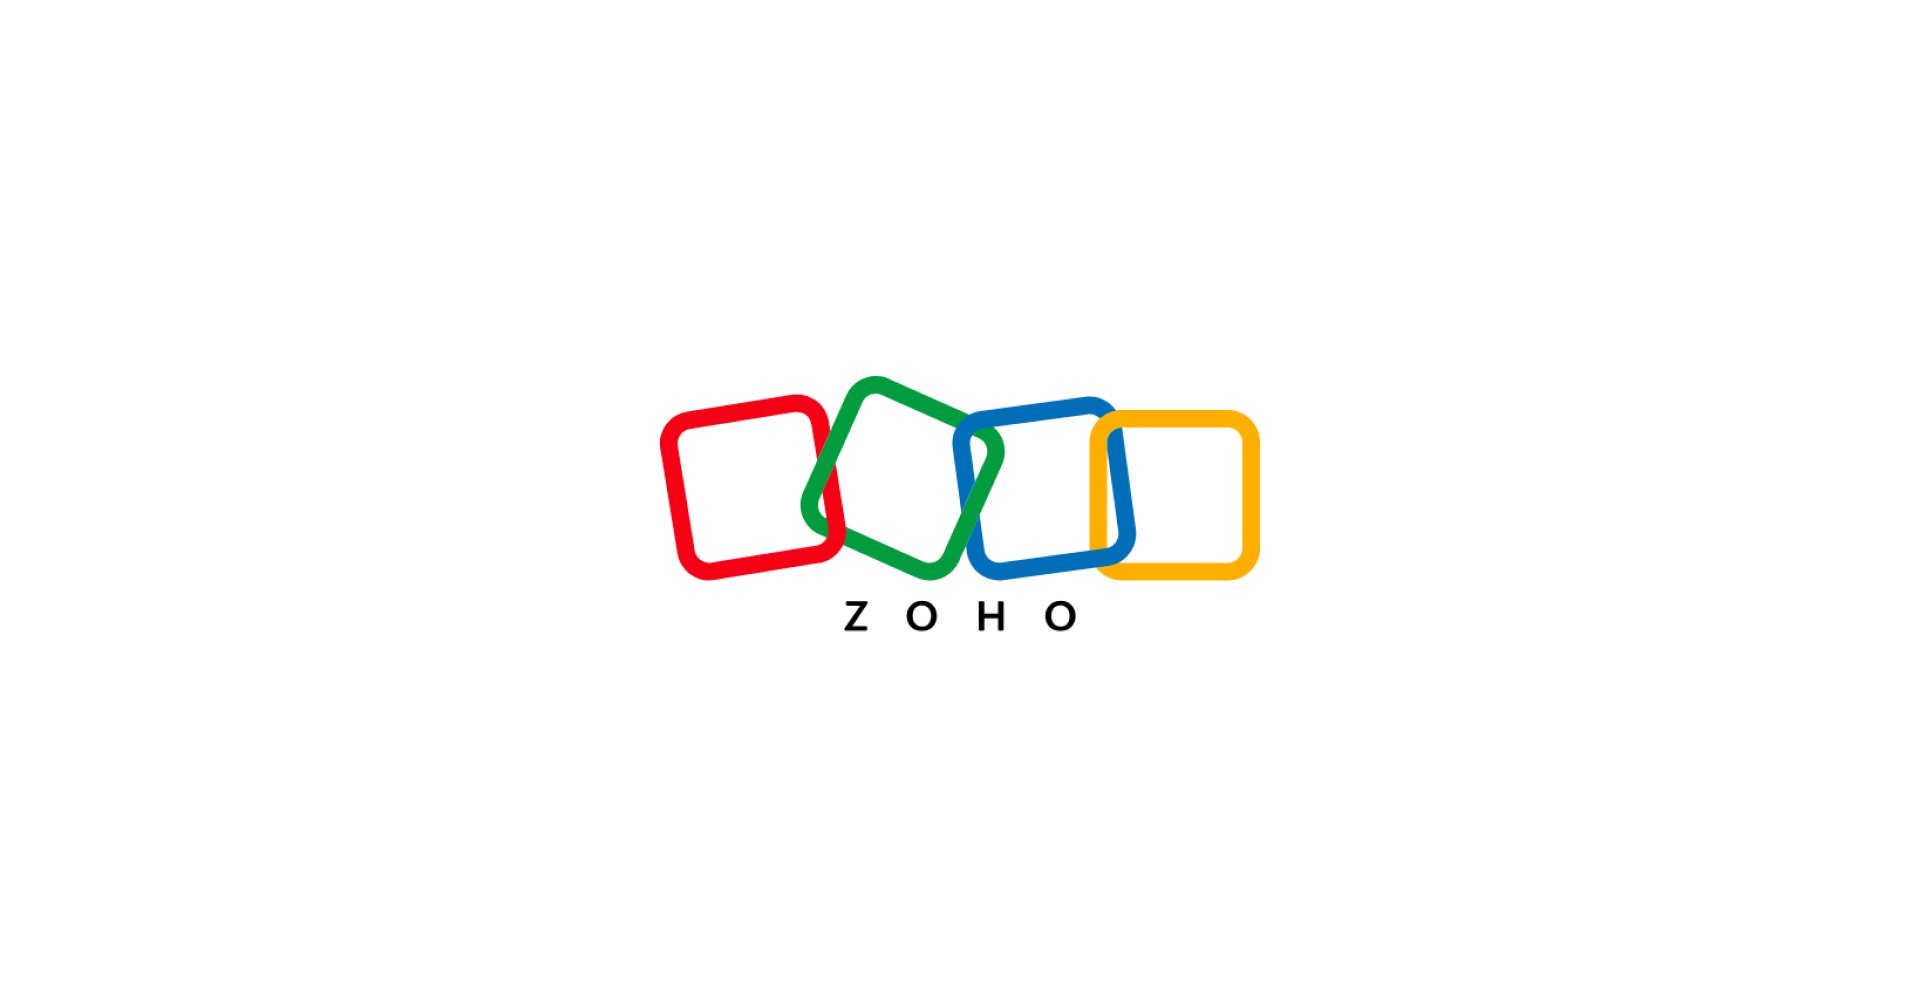 Zoho ชูจุดเด่นซอฟต์แวร์โซลูชันมาร่วมพลิกโฉมธุรกิจดิจิทัลในประเทศไทย